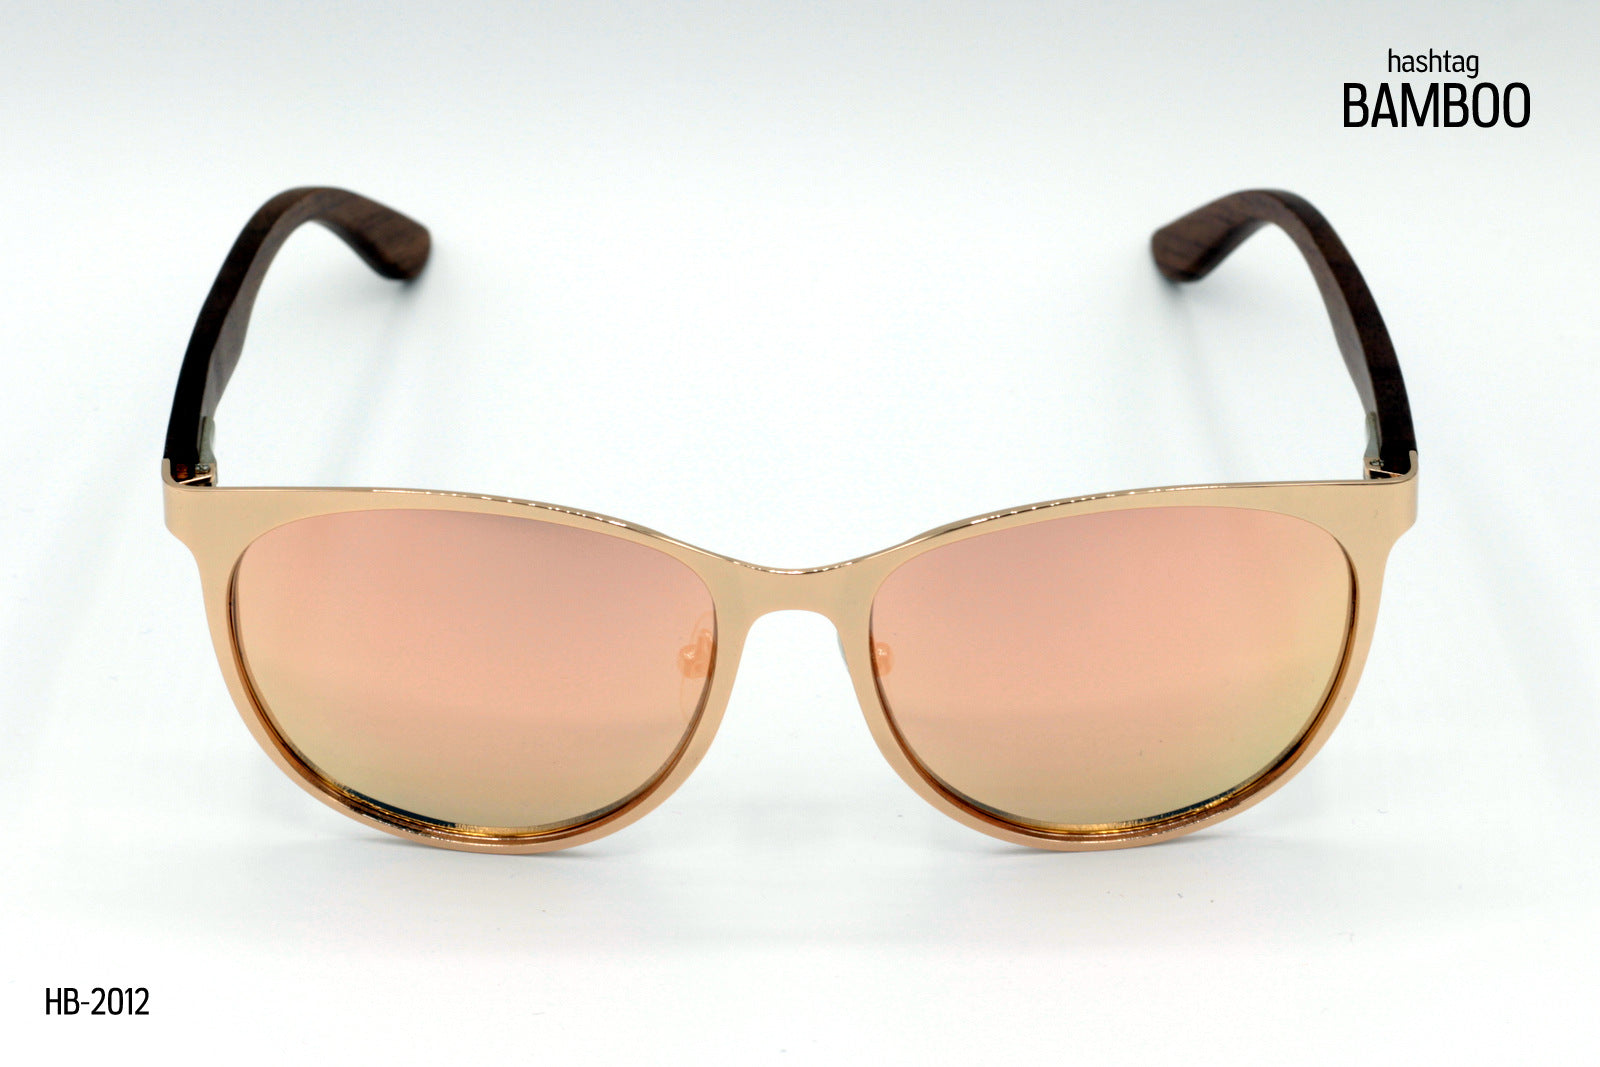 Sunglasses Ladies Metallic Polarised with Wooden Arms - ICONICS - Hashtag Bamboo